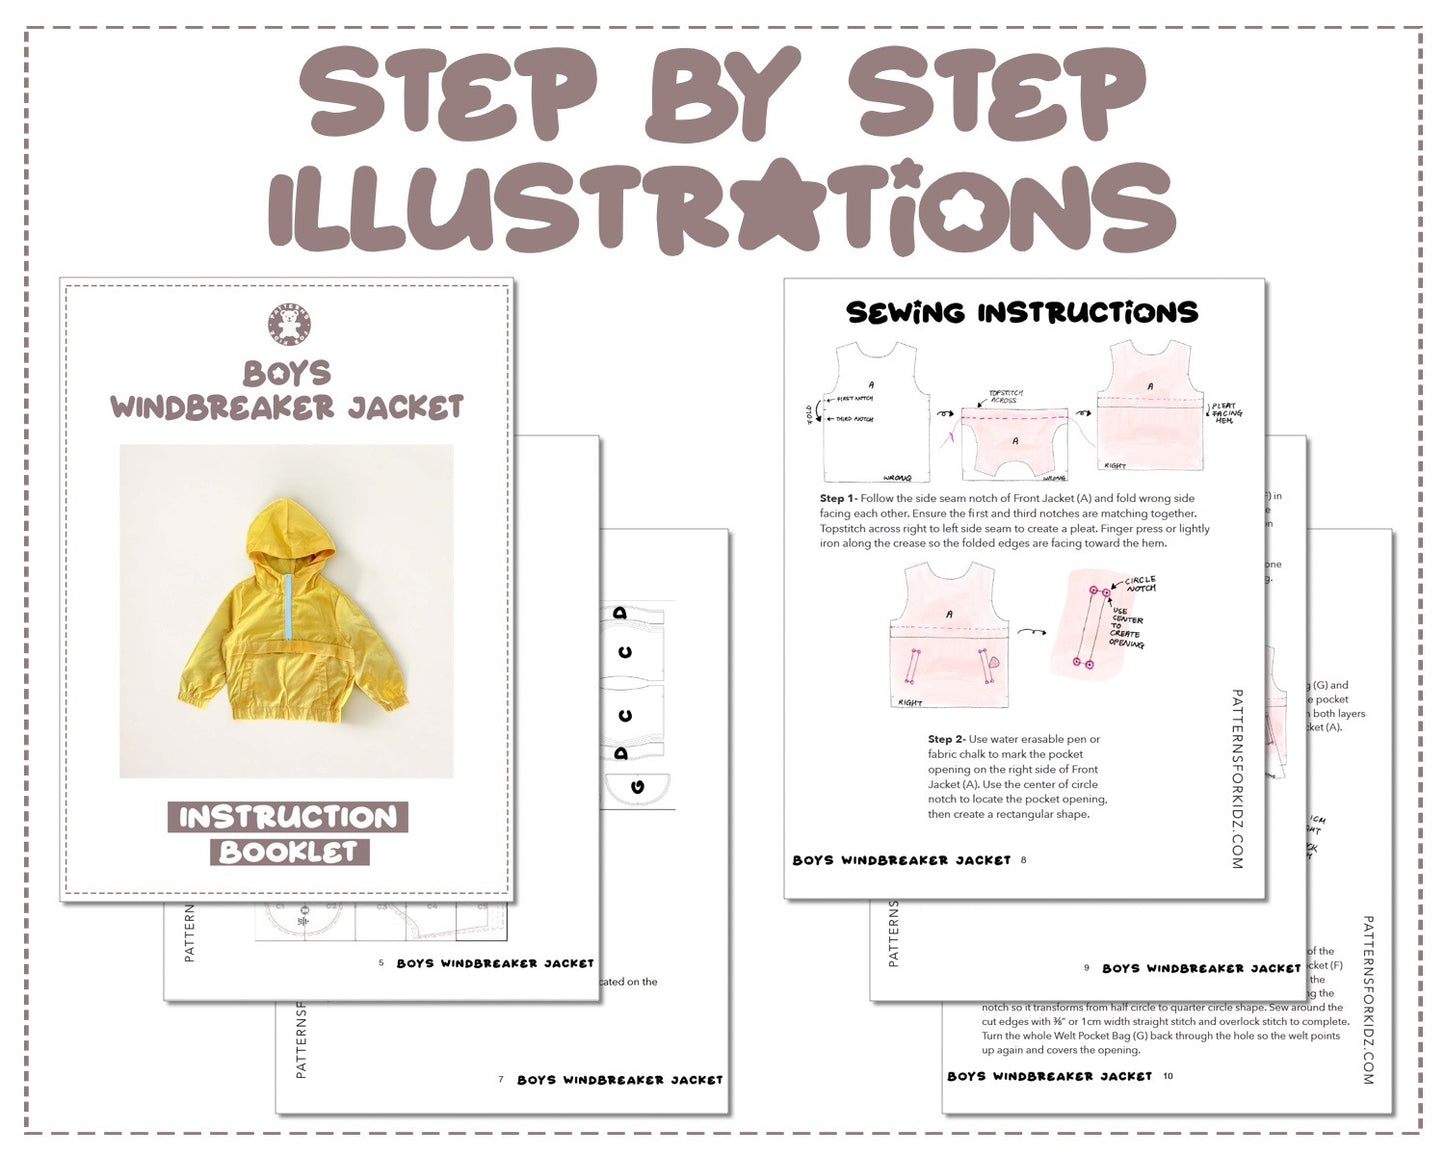 Boys Windbreaker Jacket sewing pattern step by step illustrations.